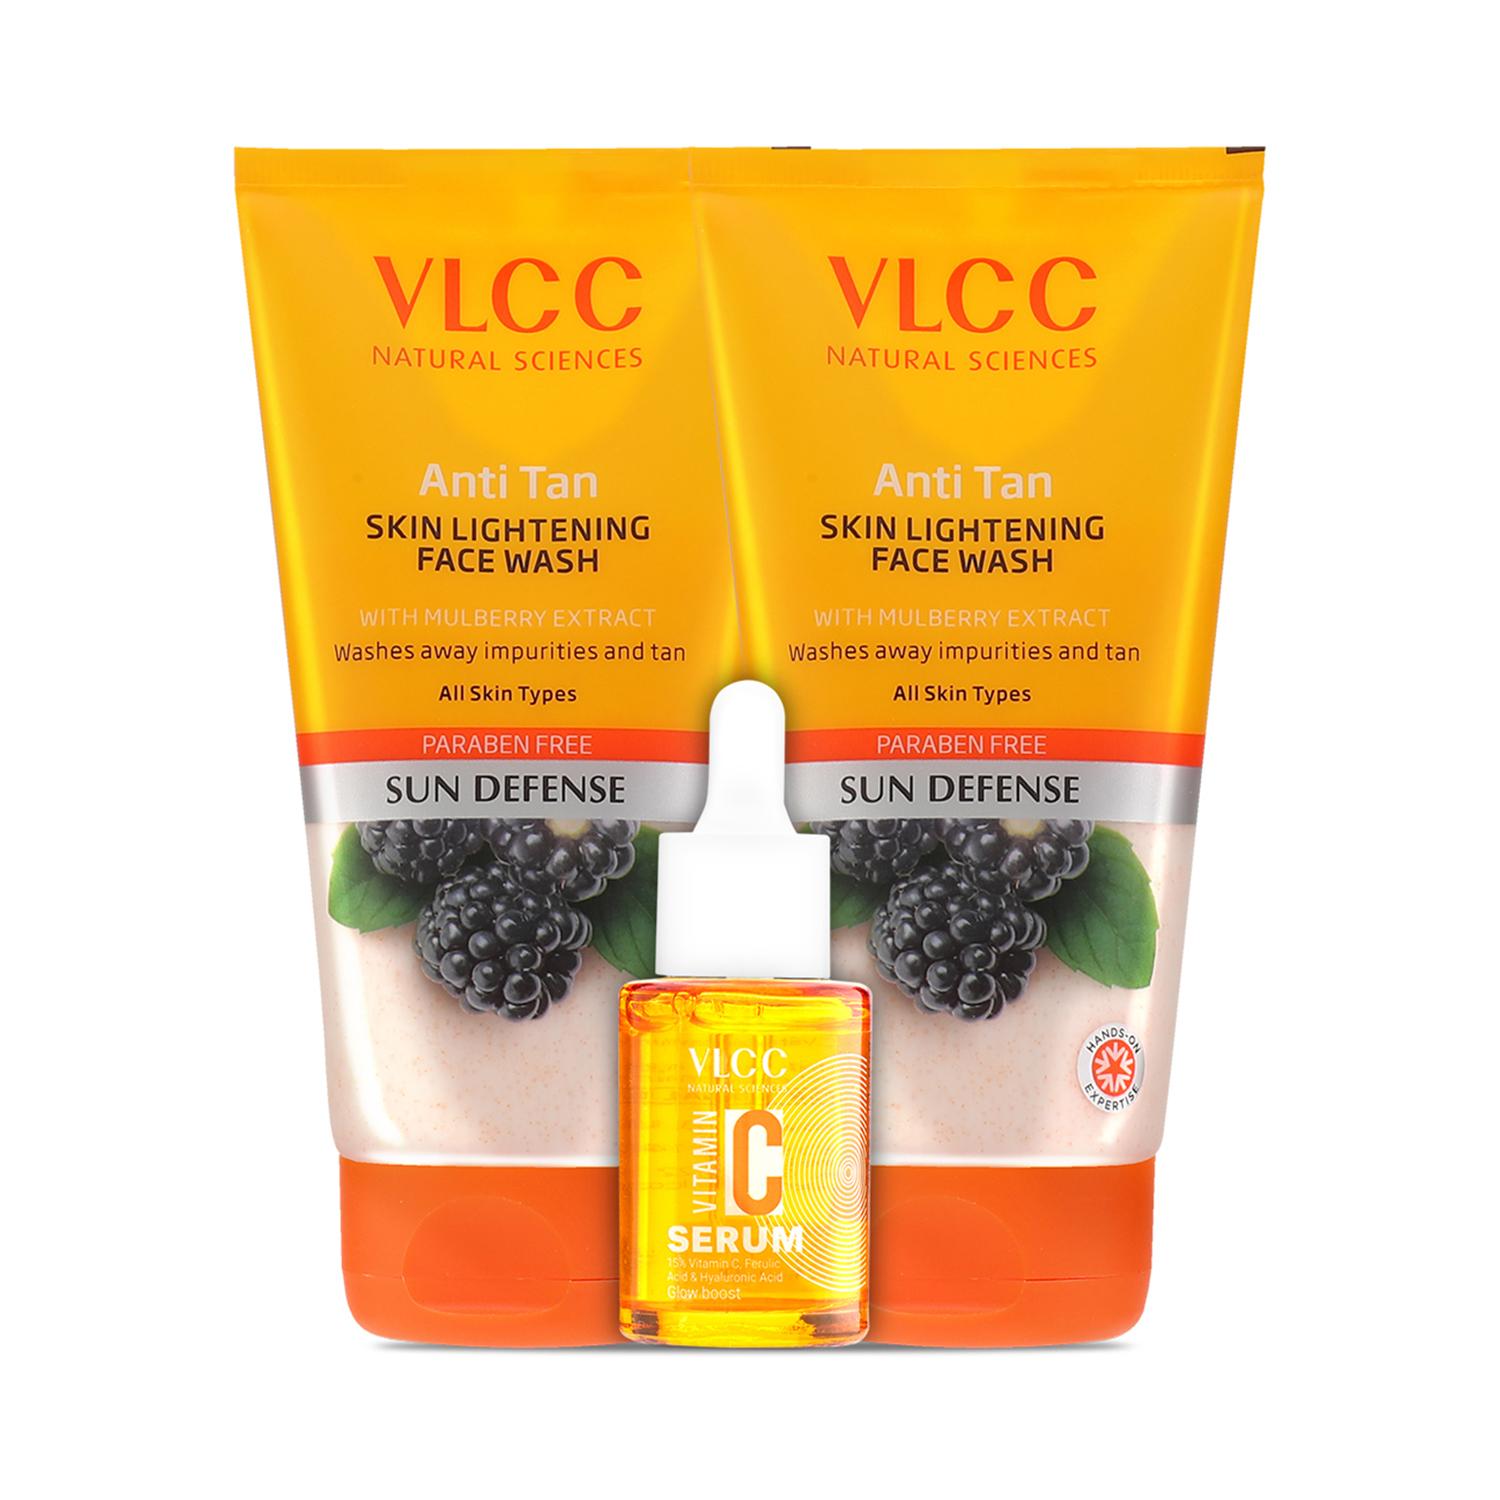 VLCC | VLCC Anti Tan Skin Lightening Face Wash & Vitamin C Night Serum Combo